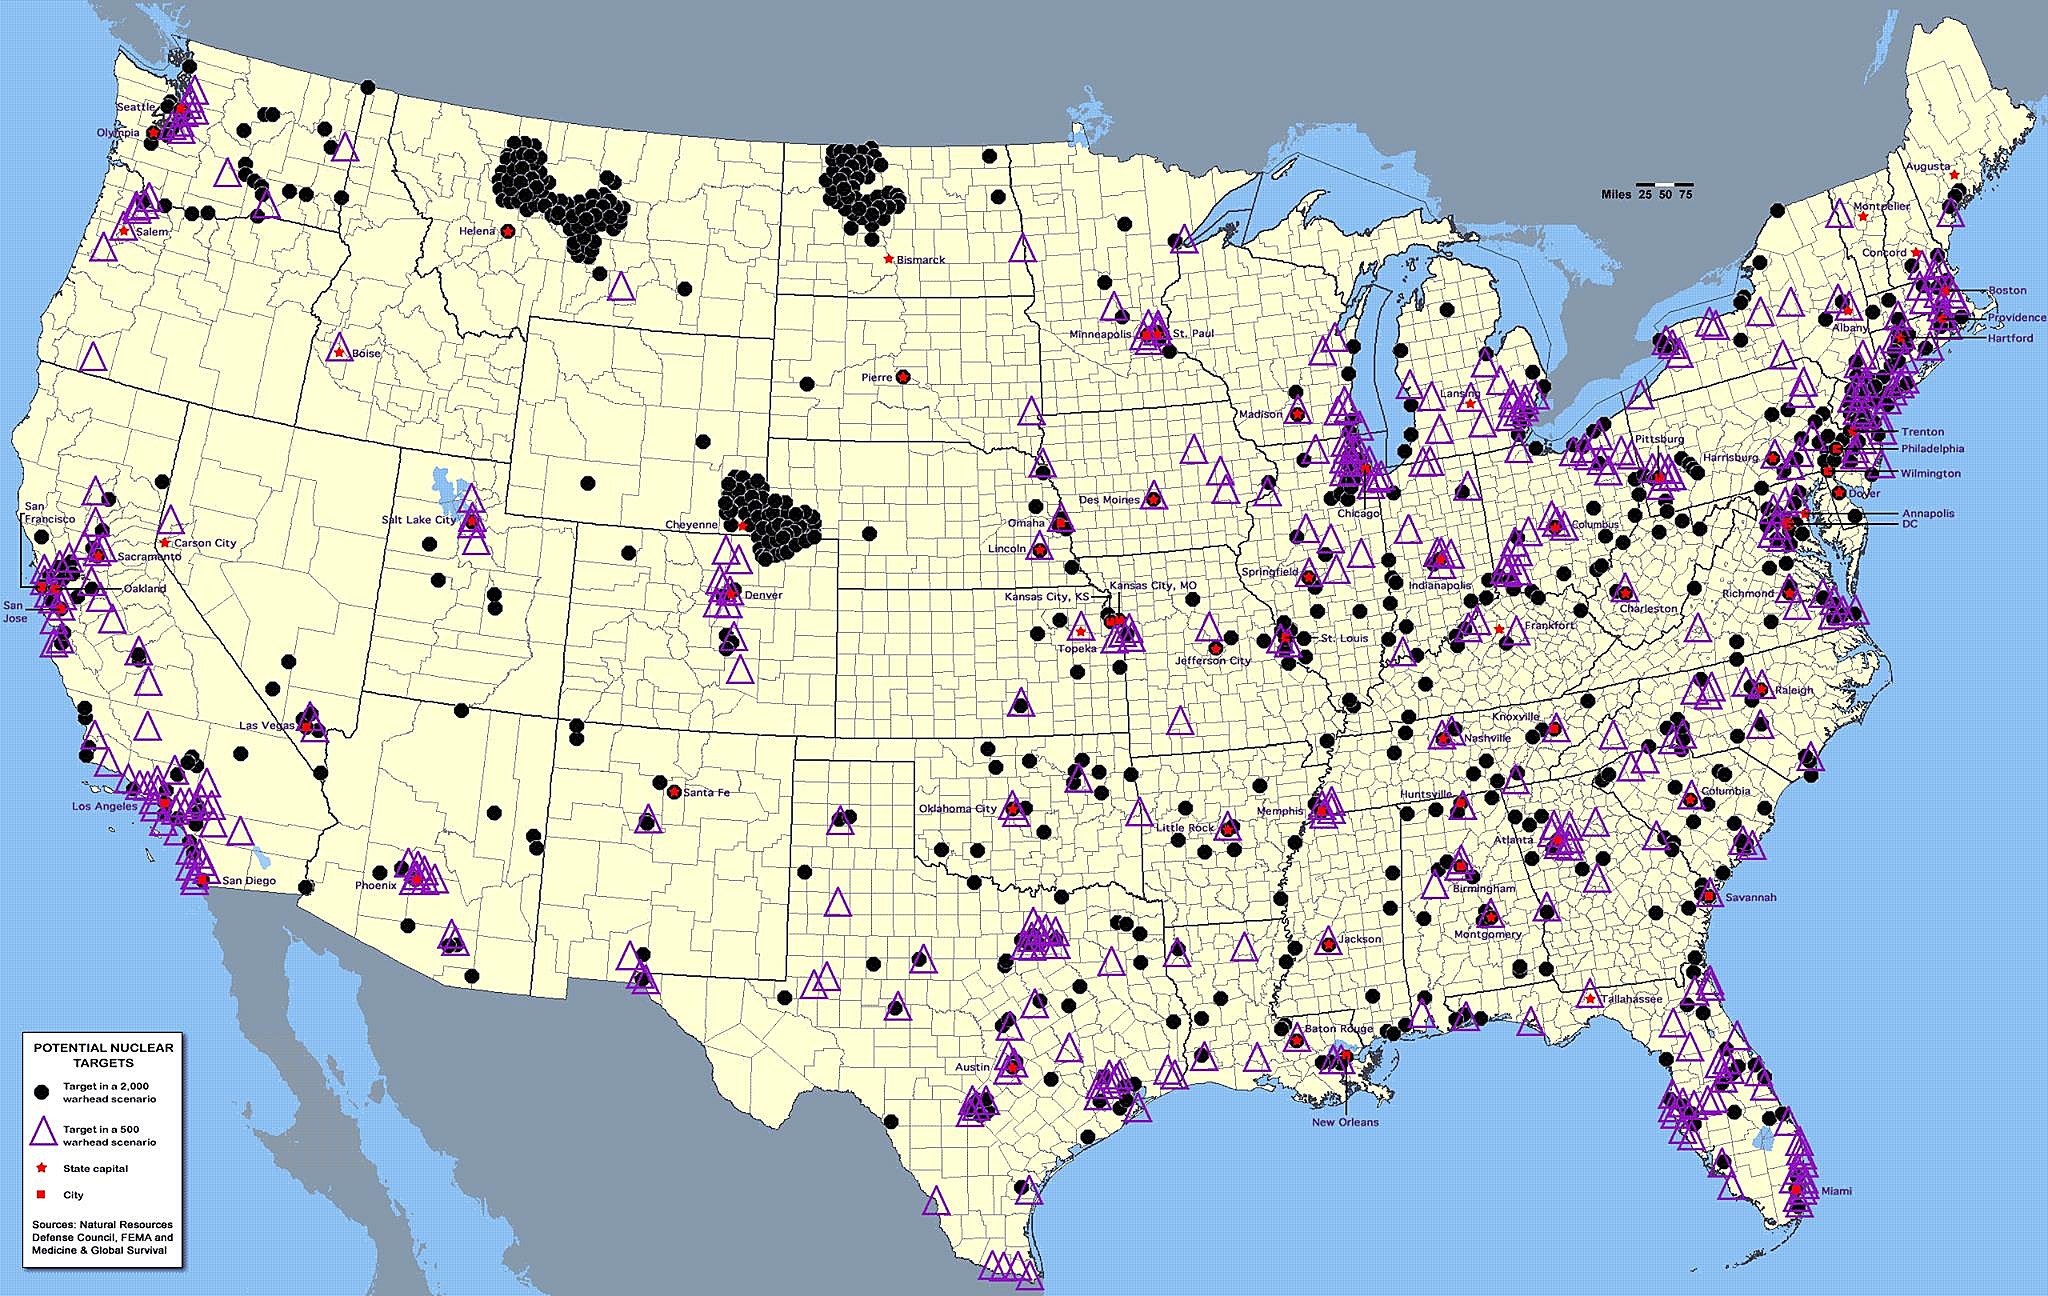 Newest FEMA Map Shows Missouri Illinois Targets If Nukes Fly